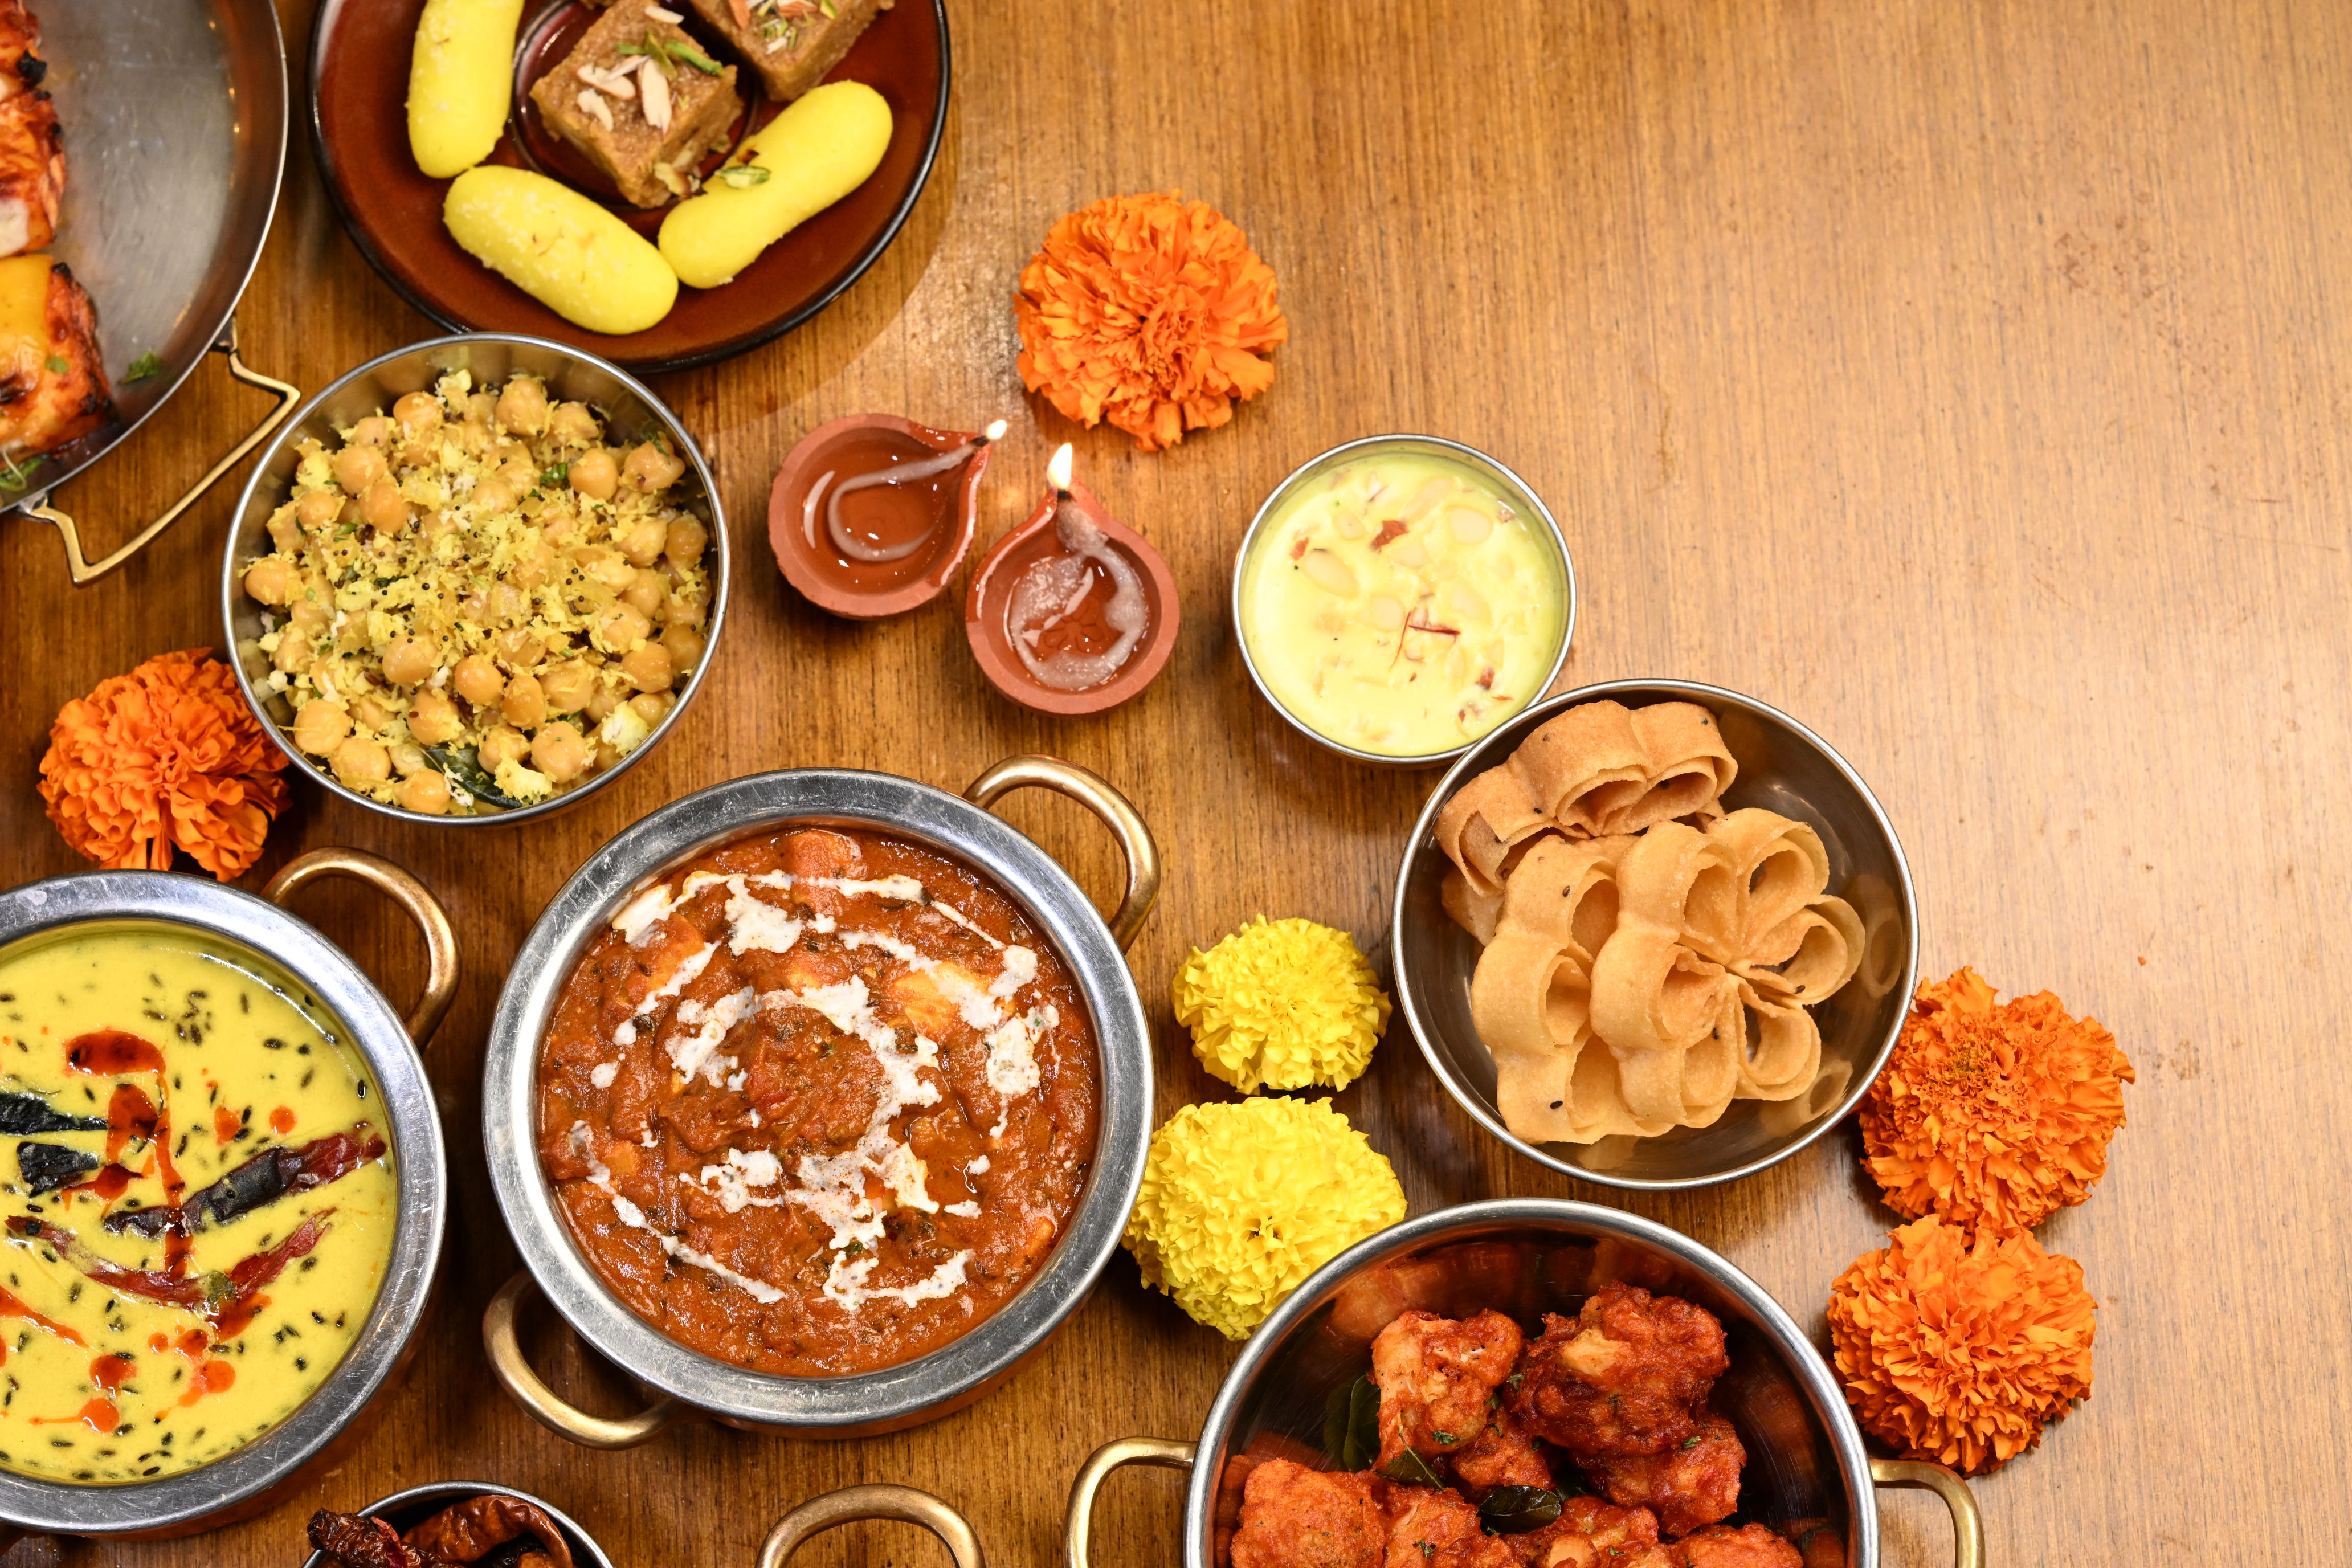 Renaissance Bengaluru Race Course Hotel presents Diwali festive brunch and dinner to celebrate togetherness